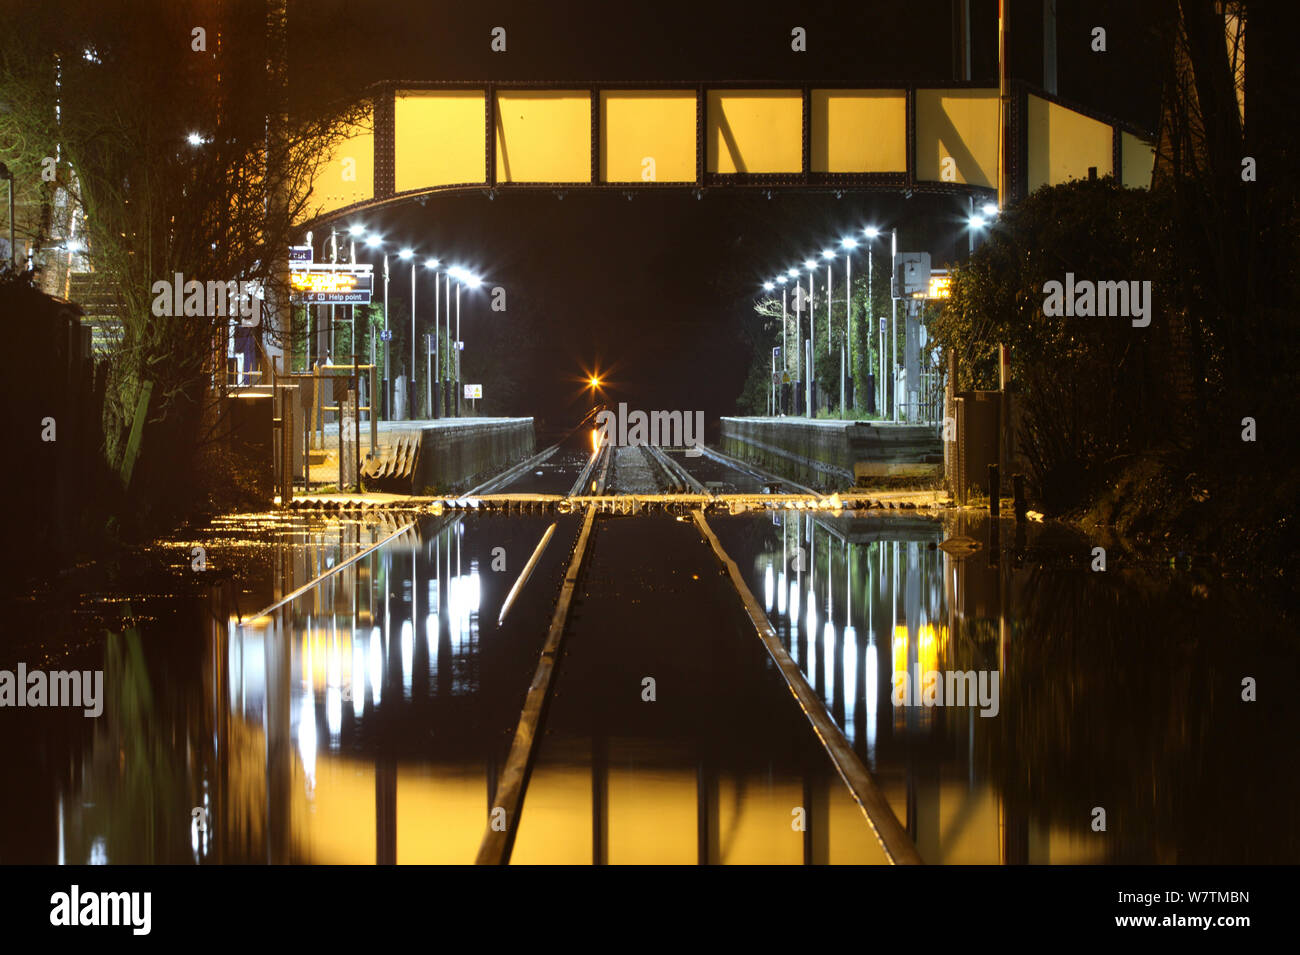 Überflutet Datchet Bahnhof bei Nacht, Berkshire, England, UK, 11. Februar 2014. Stockfoto